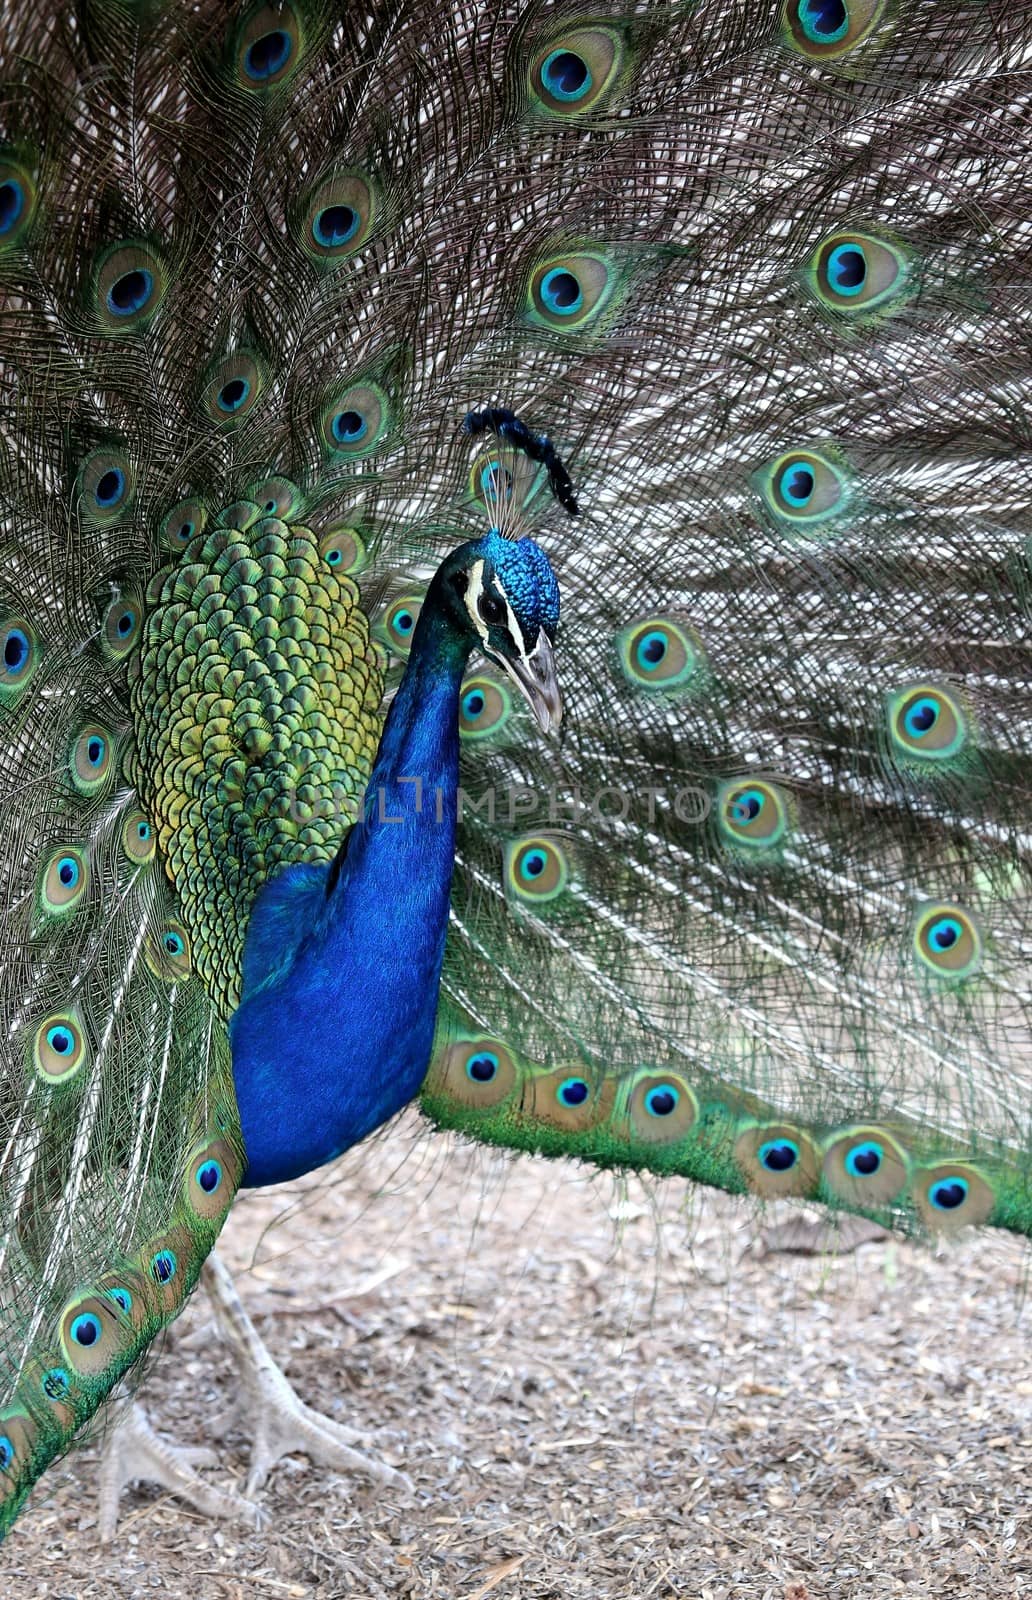 Peacock Display by fouroaks